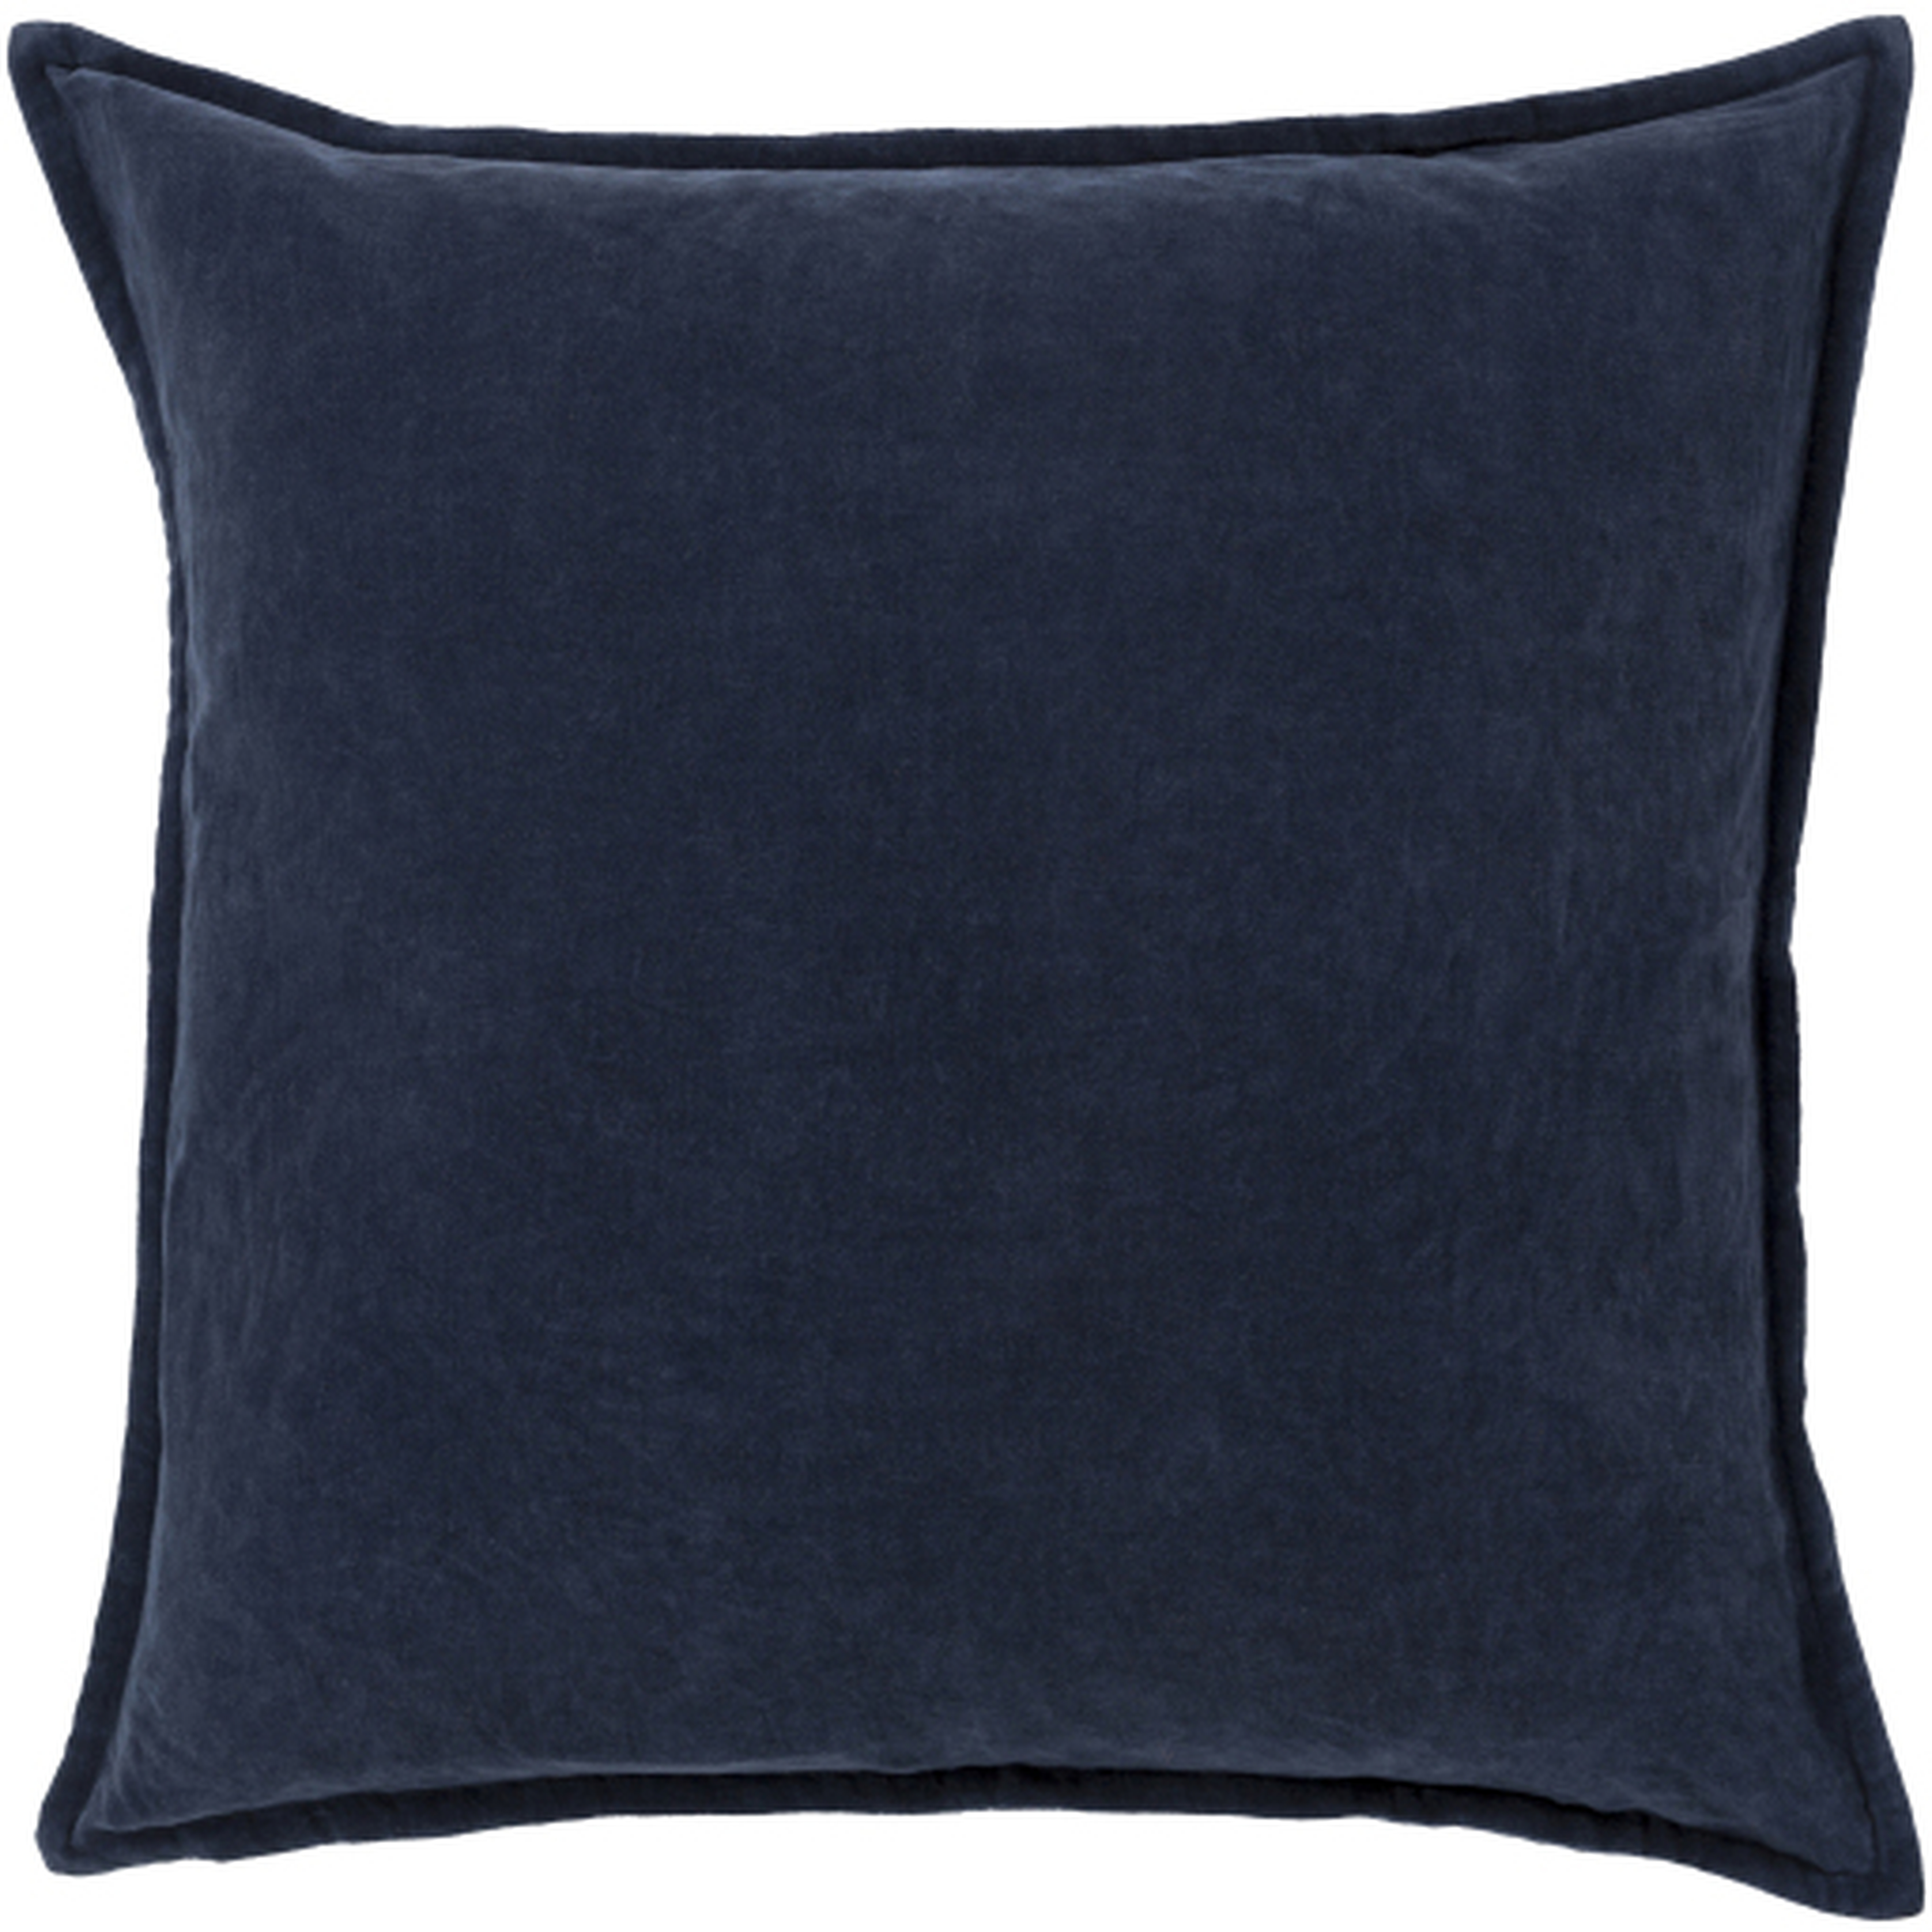 Cotton Velvet Pillow, 20" x 20", Navy, with Down Insert - Surya